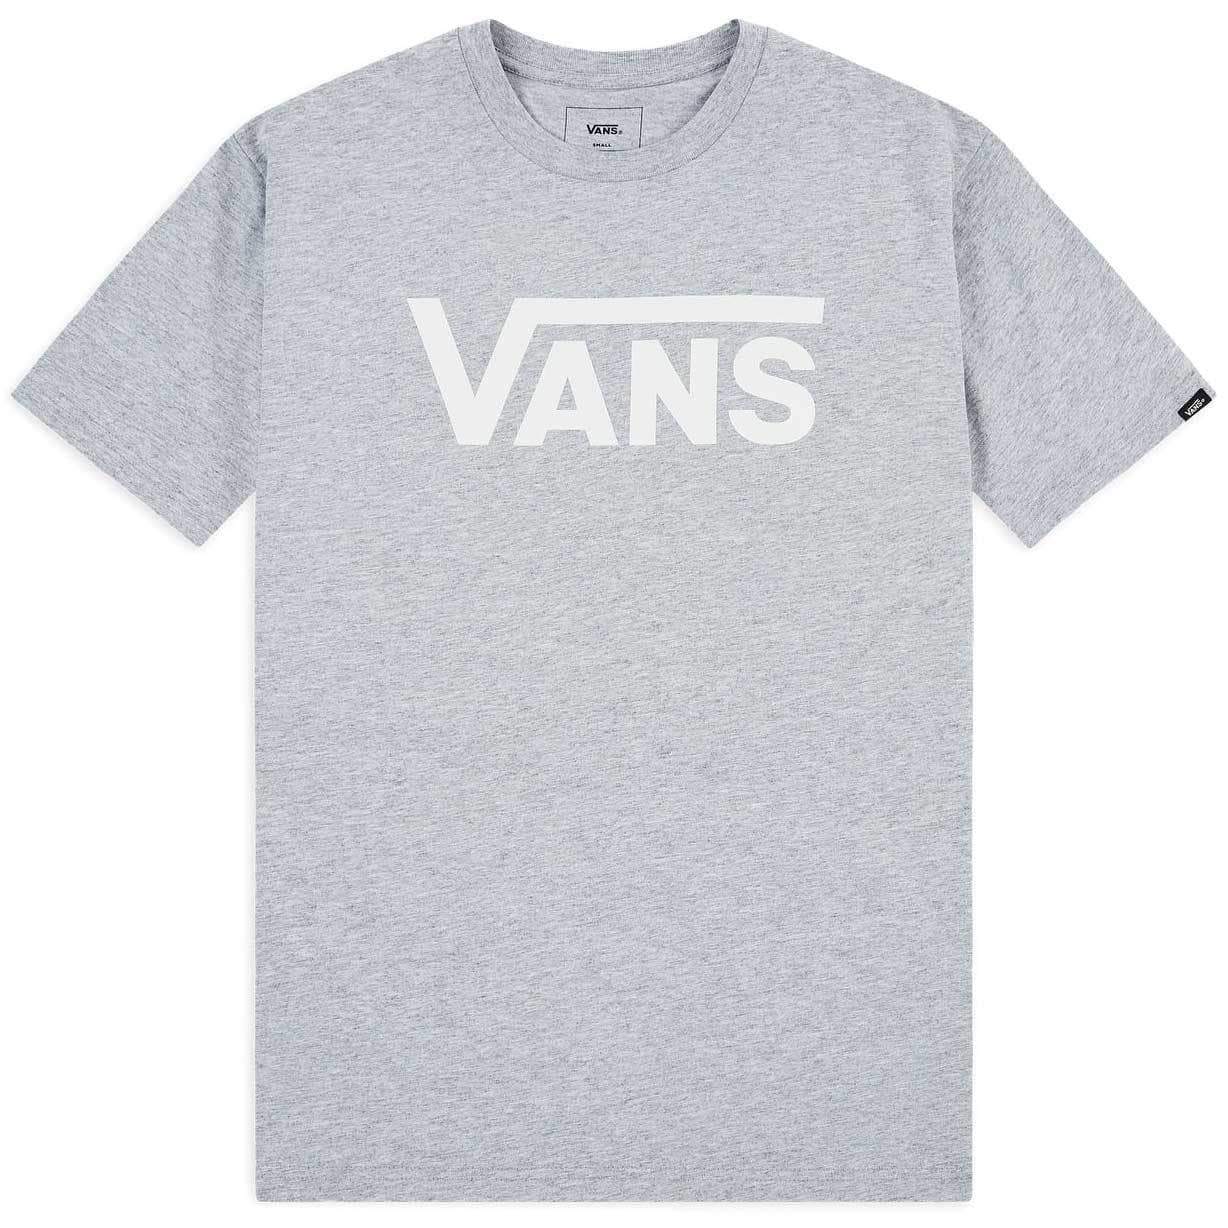 vans classic logo t shirt